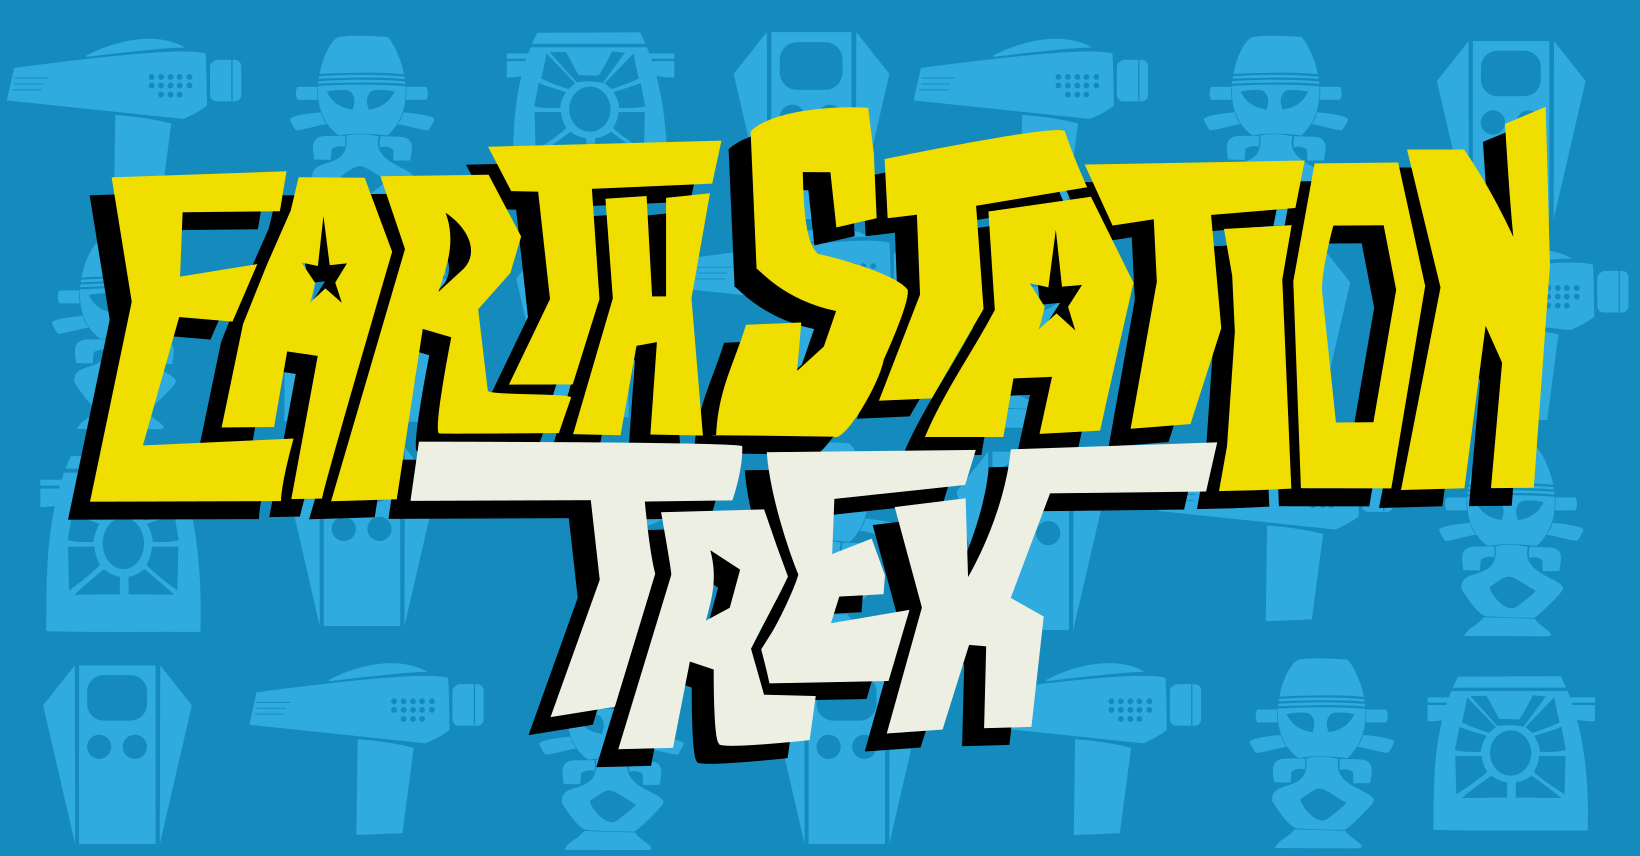 Earth Station Trek header image 1